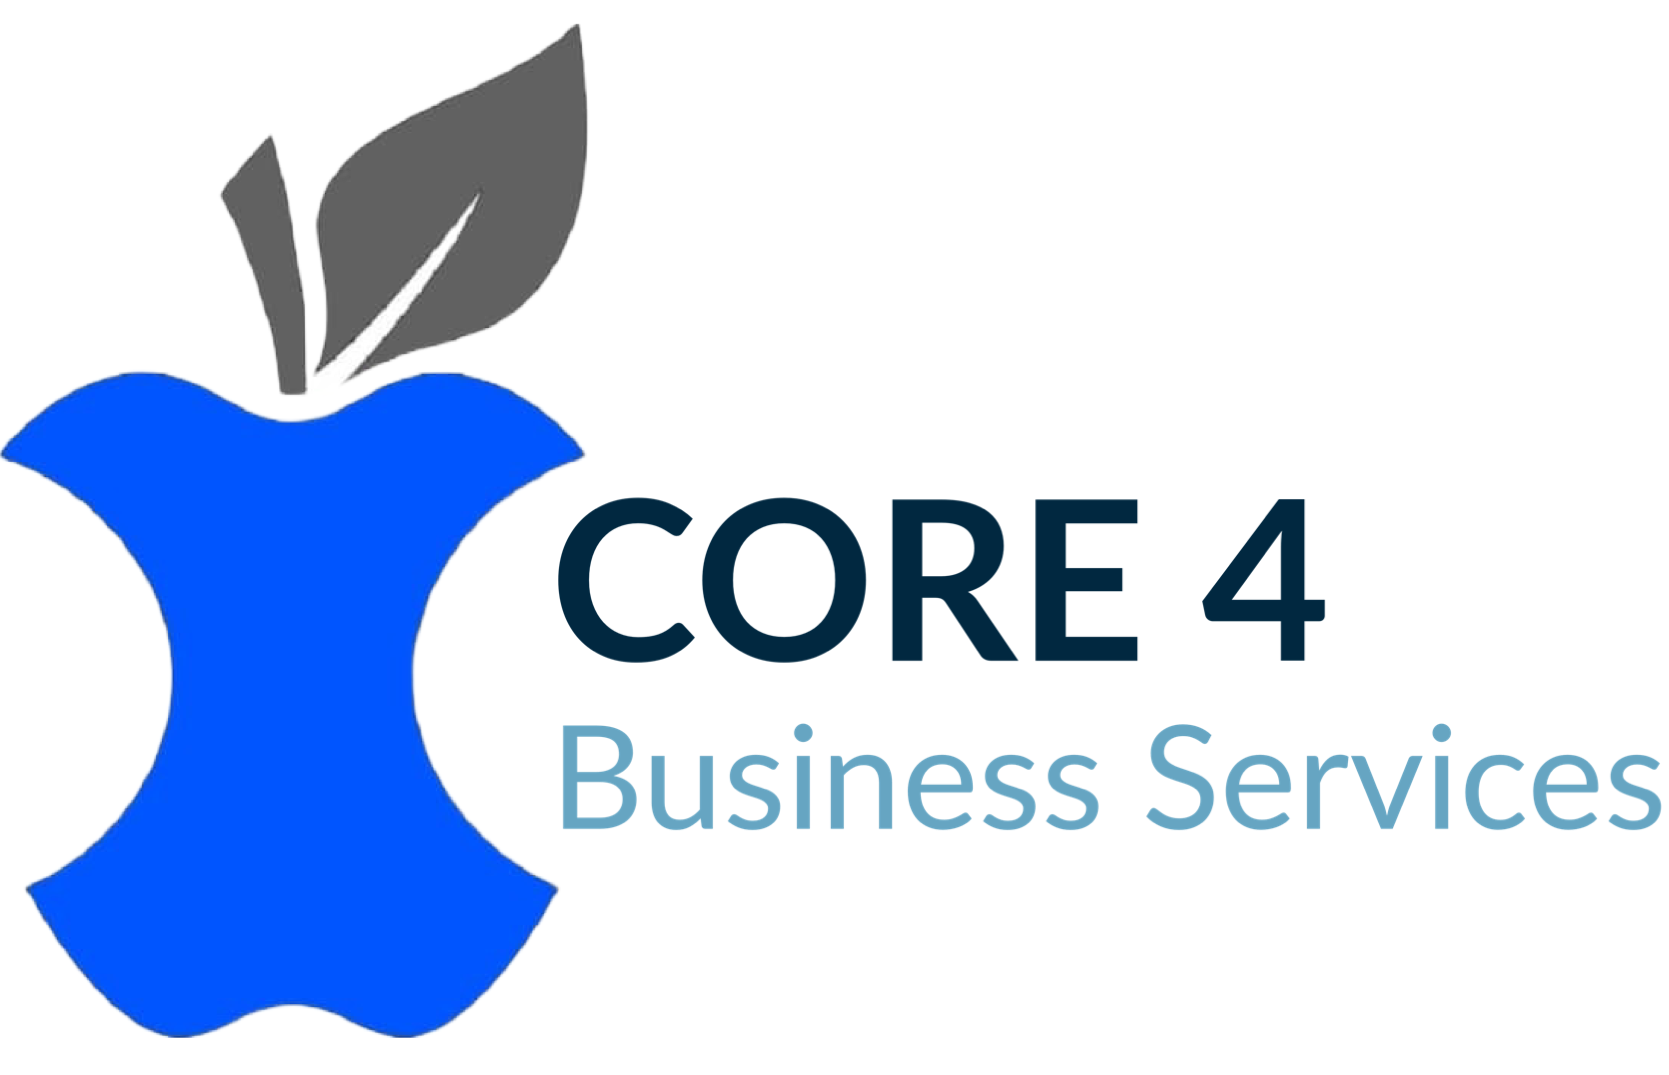 Core 4 Business Services_logo